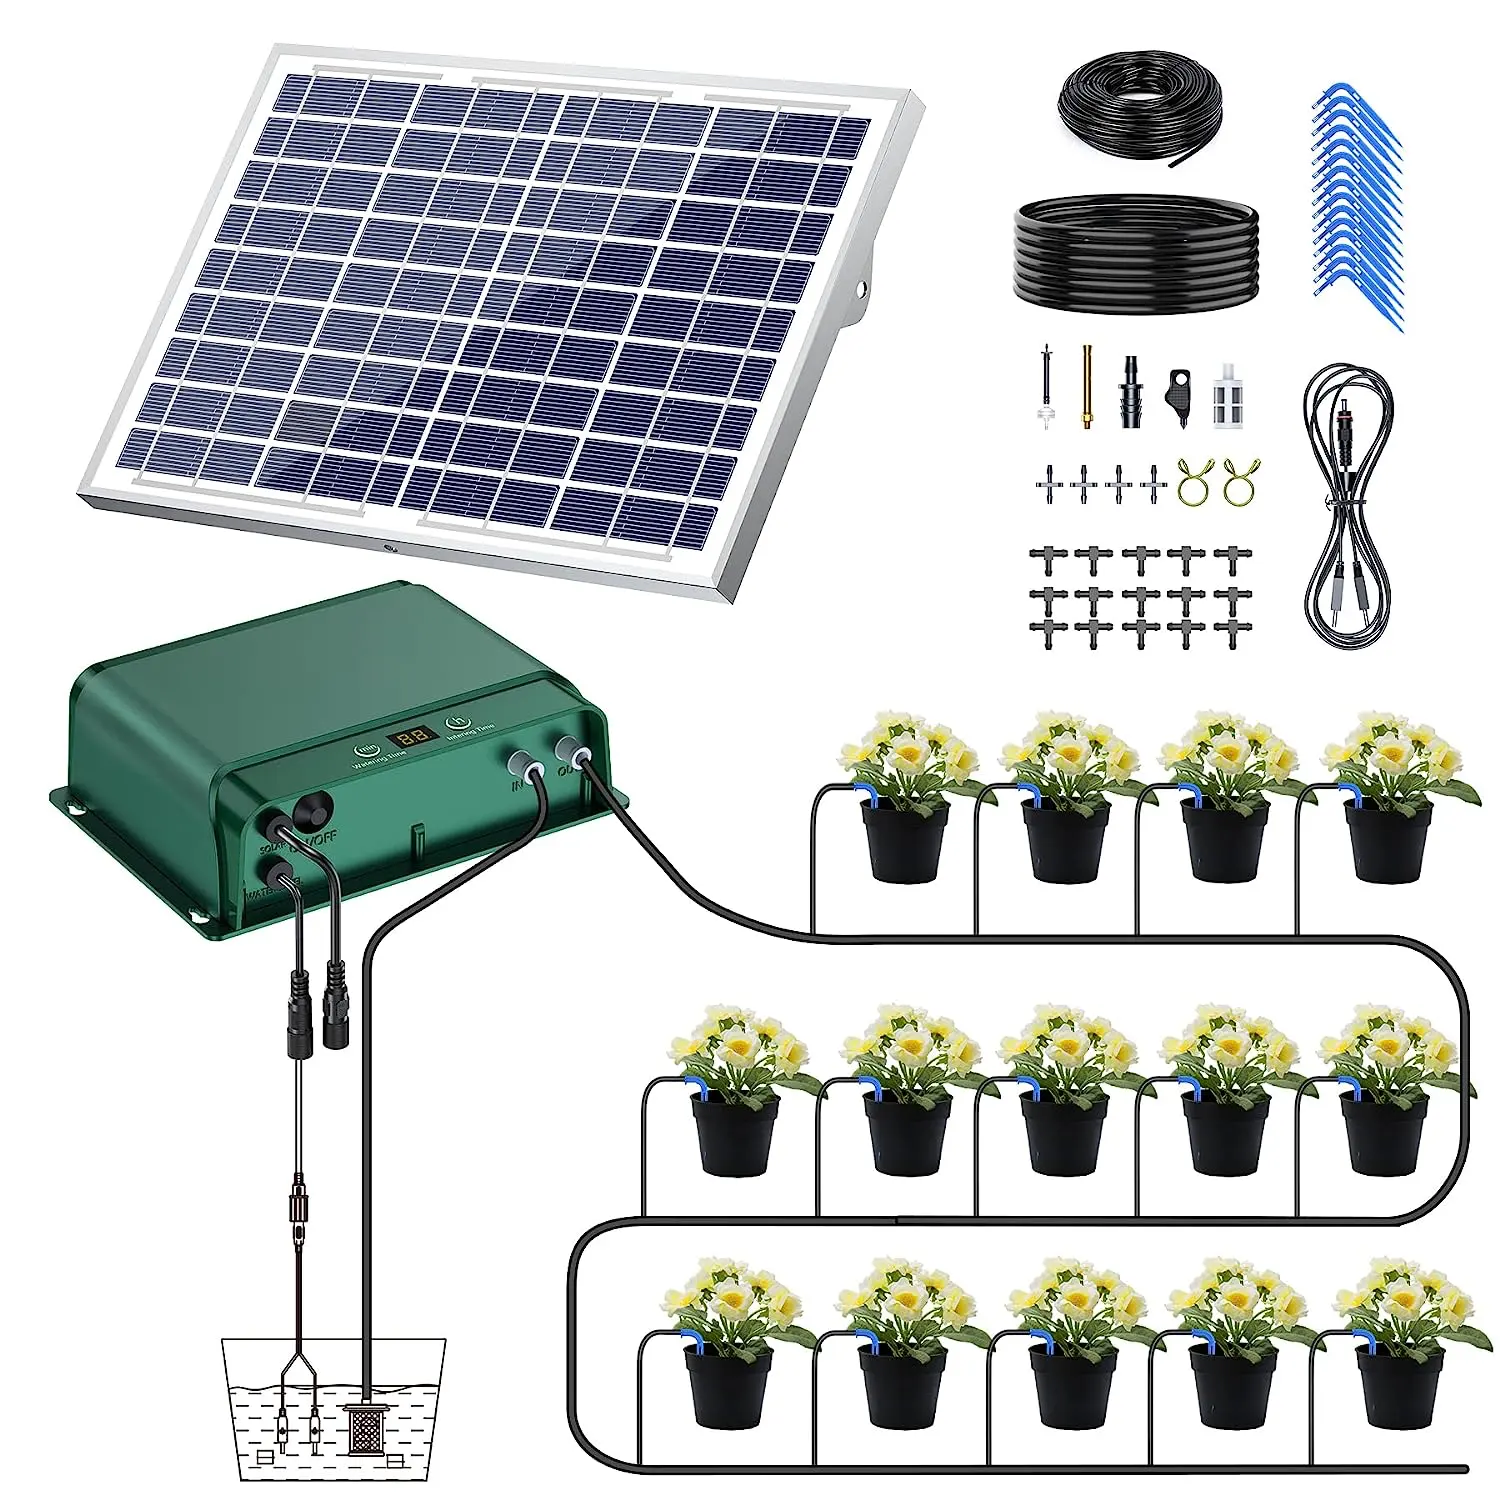 Controladores de sistema de goteo automático strowberry Micro Kit de goteo hogar jardín balcón plantas solares riego